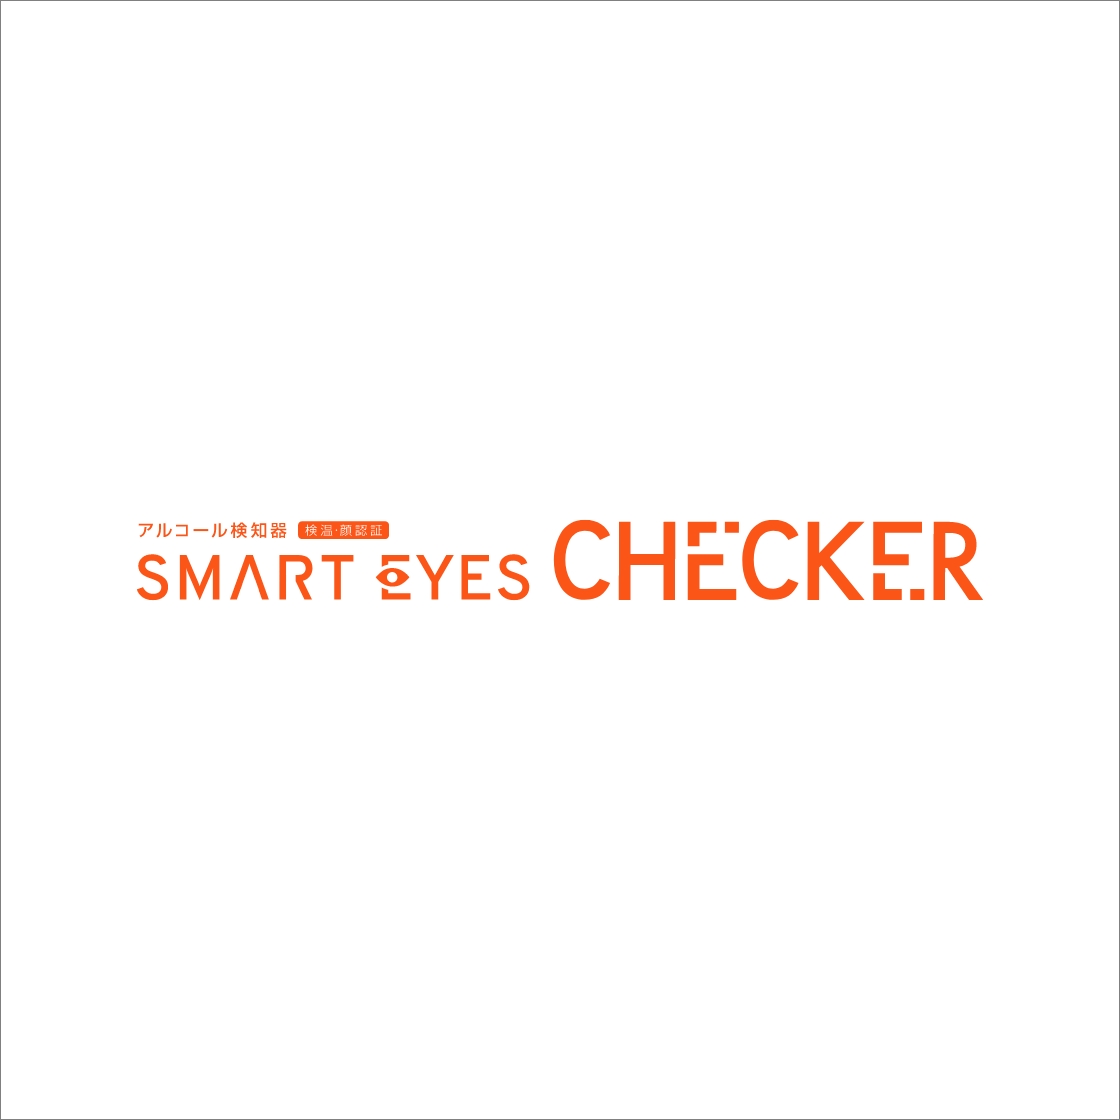 Smarteyes CHECKER